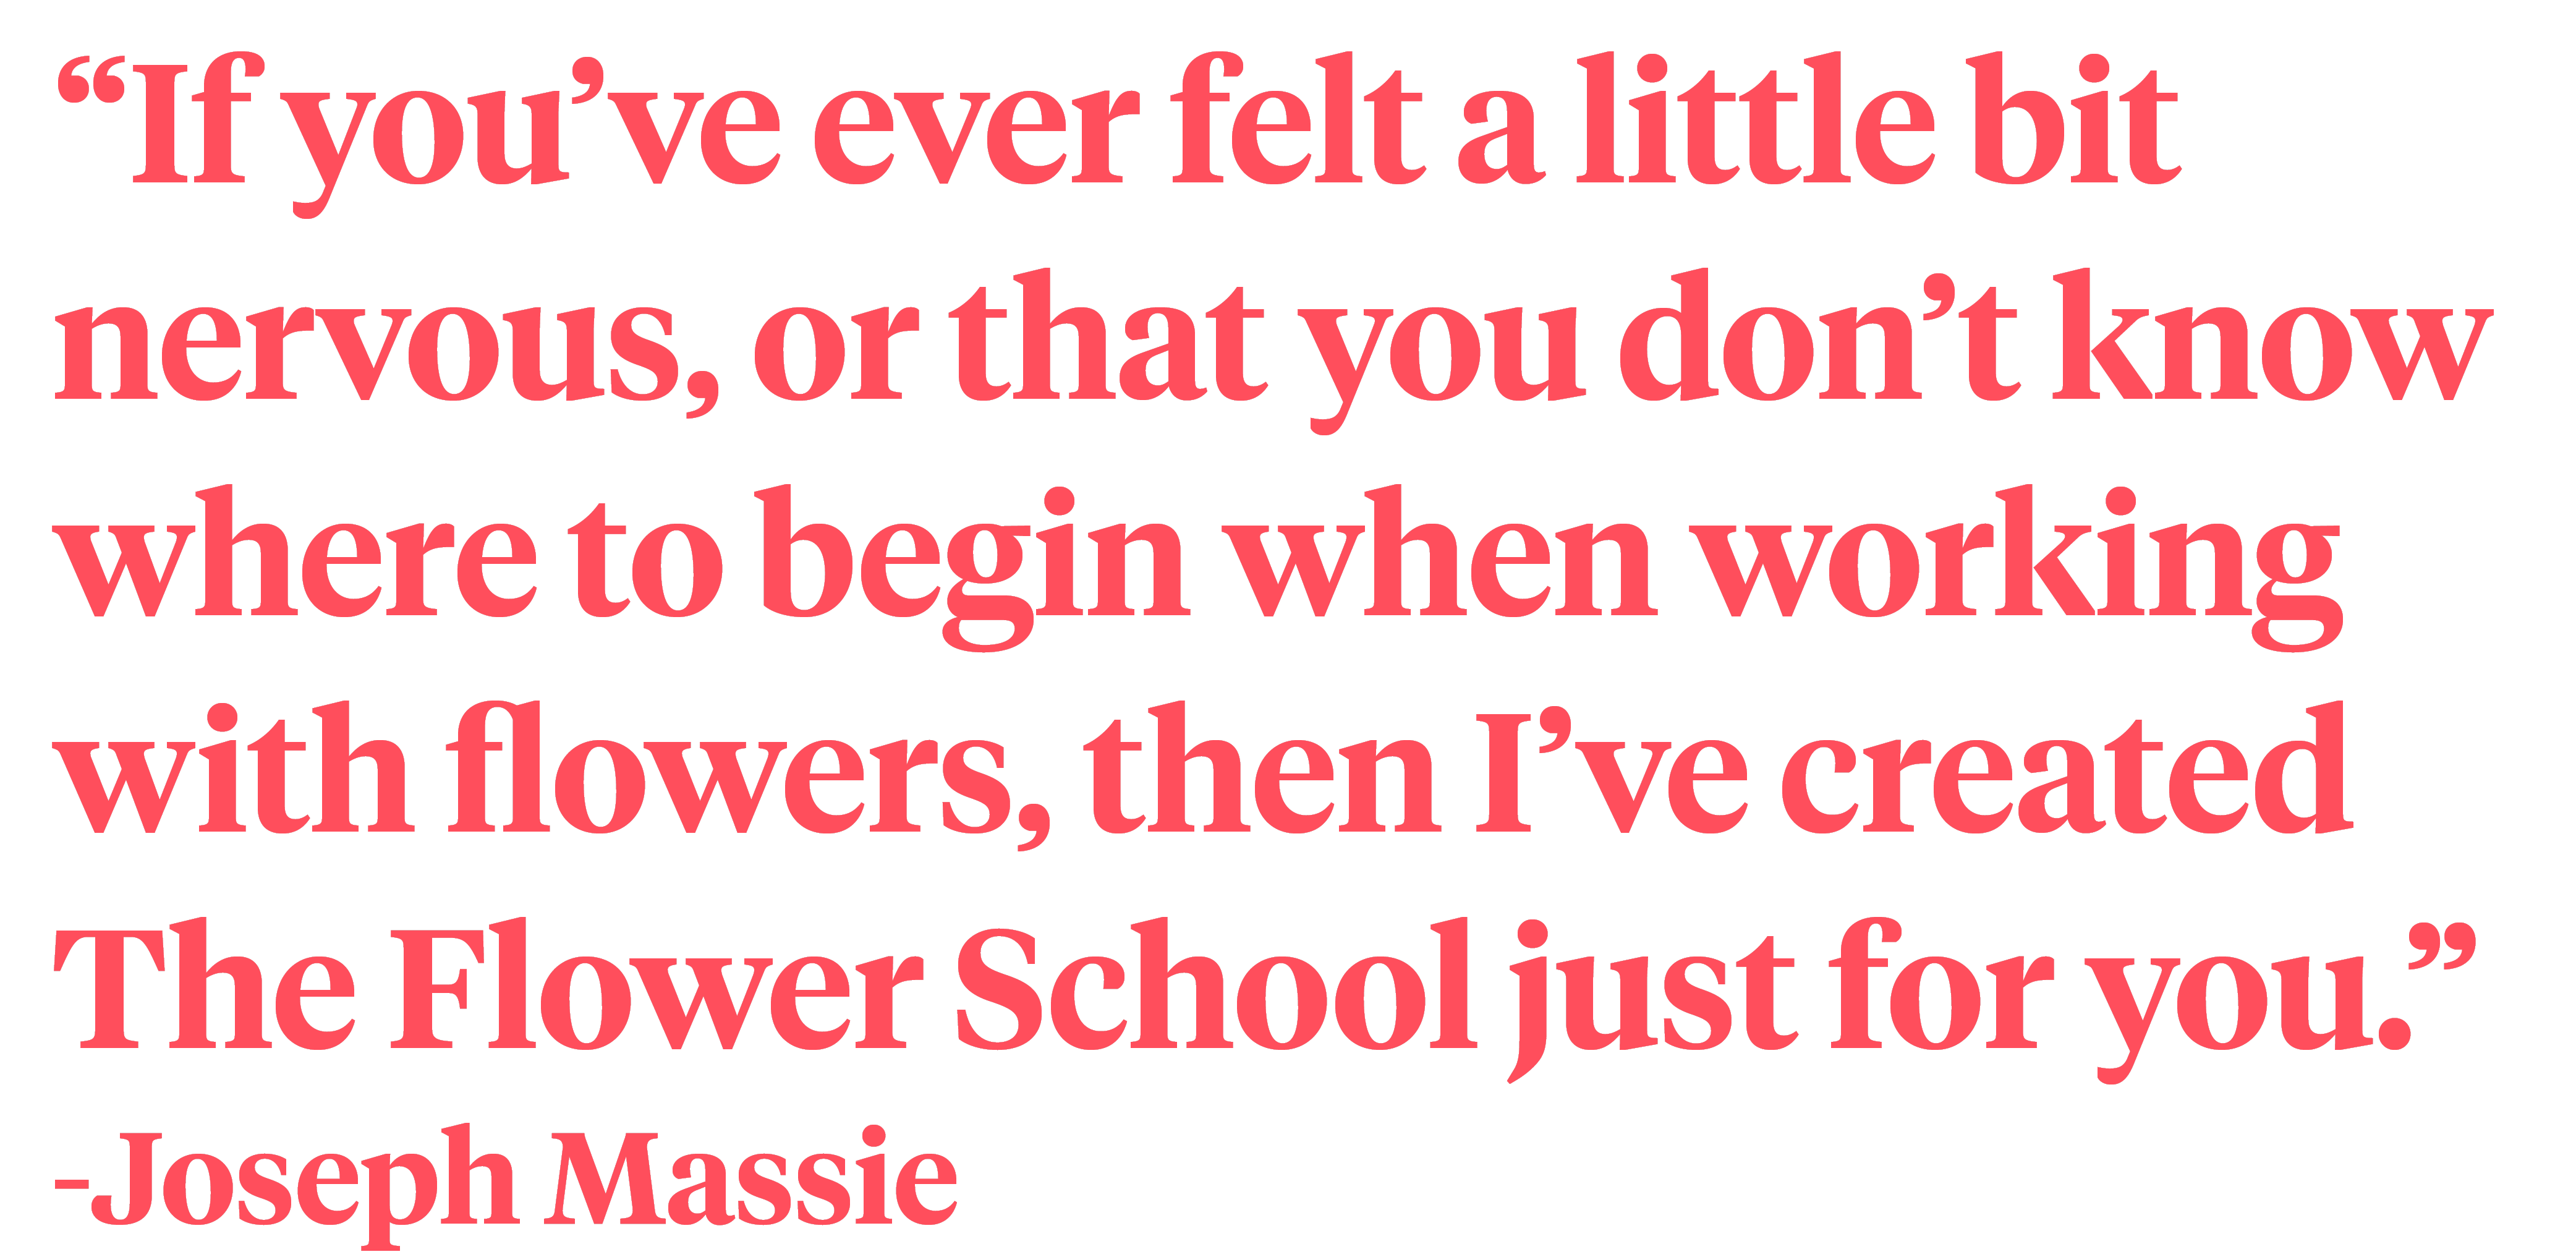 Joseph Massie The Flower School quote on Thursd